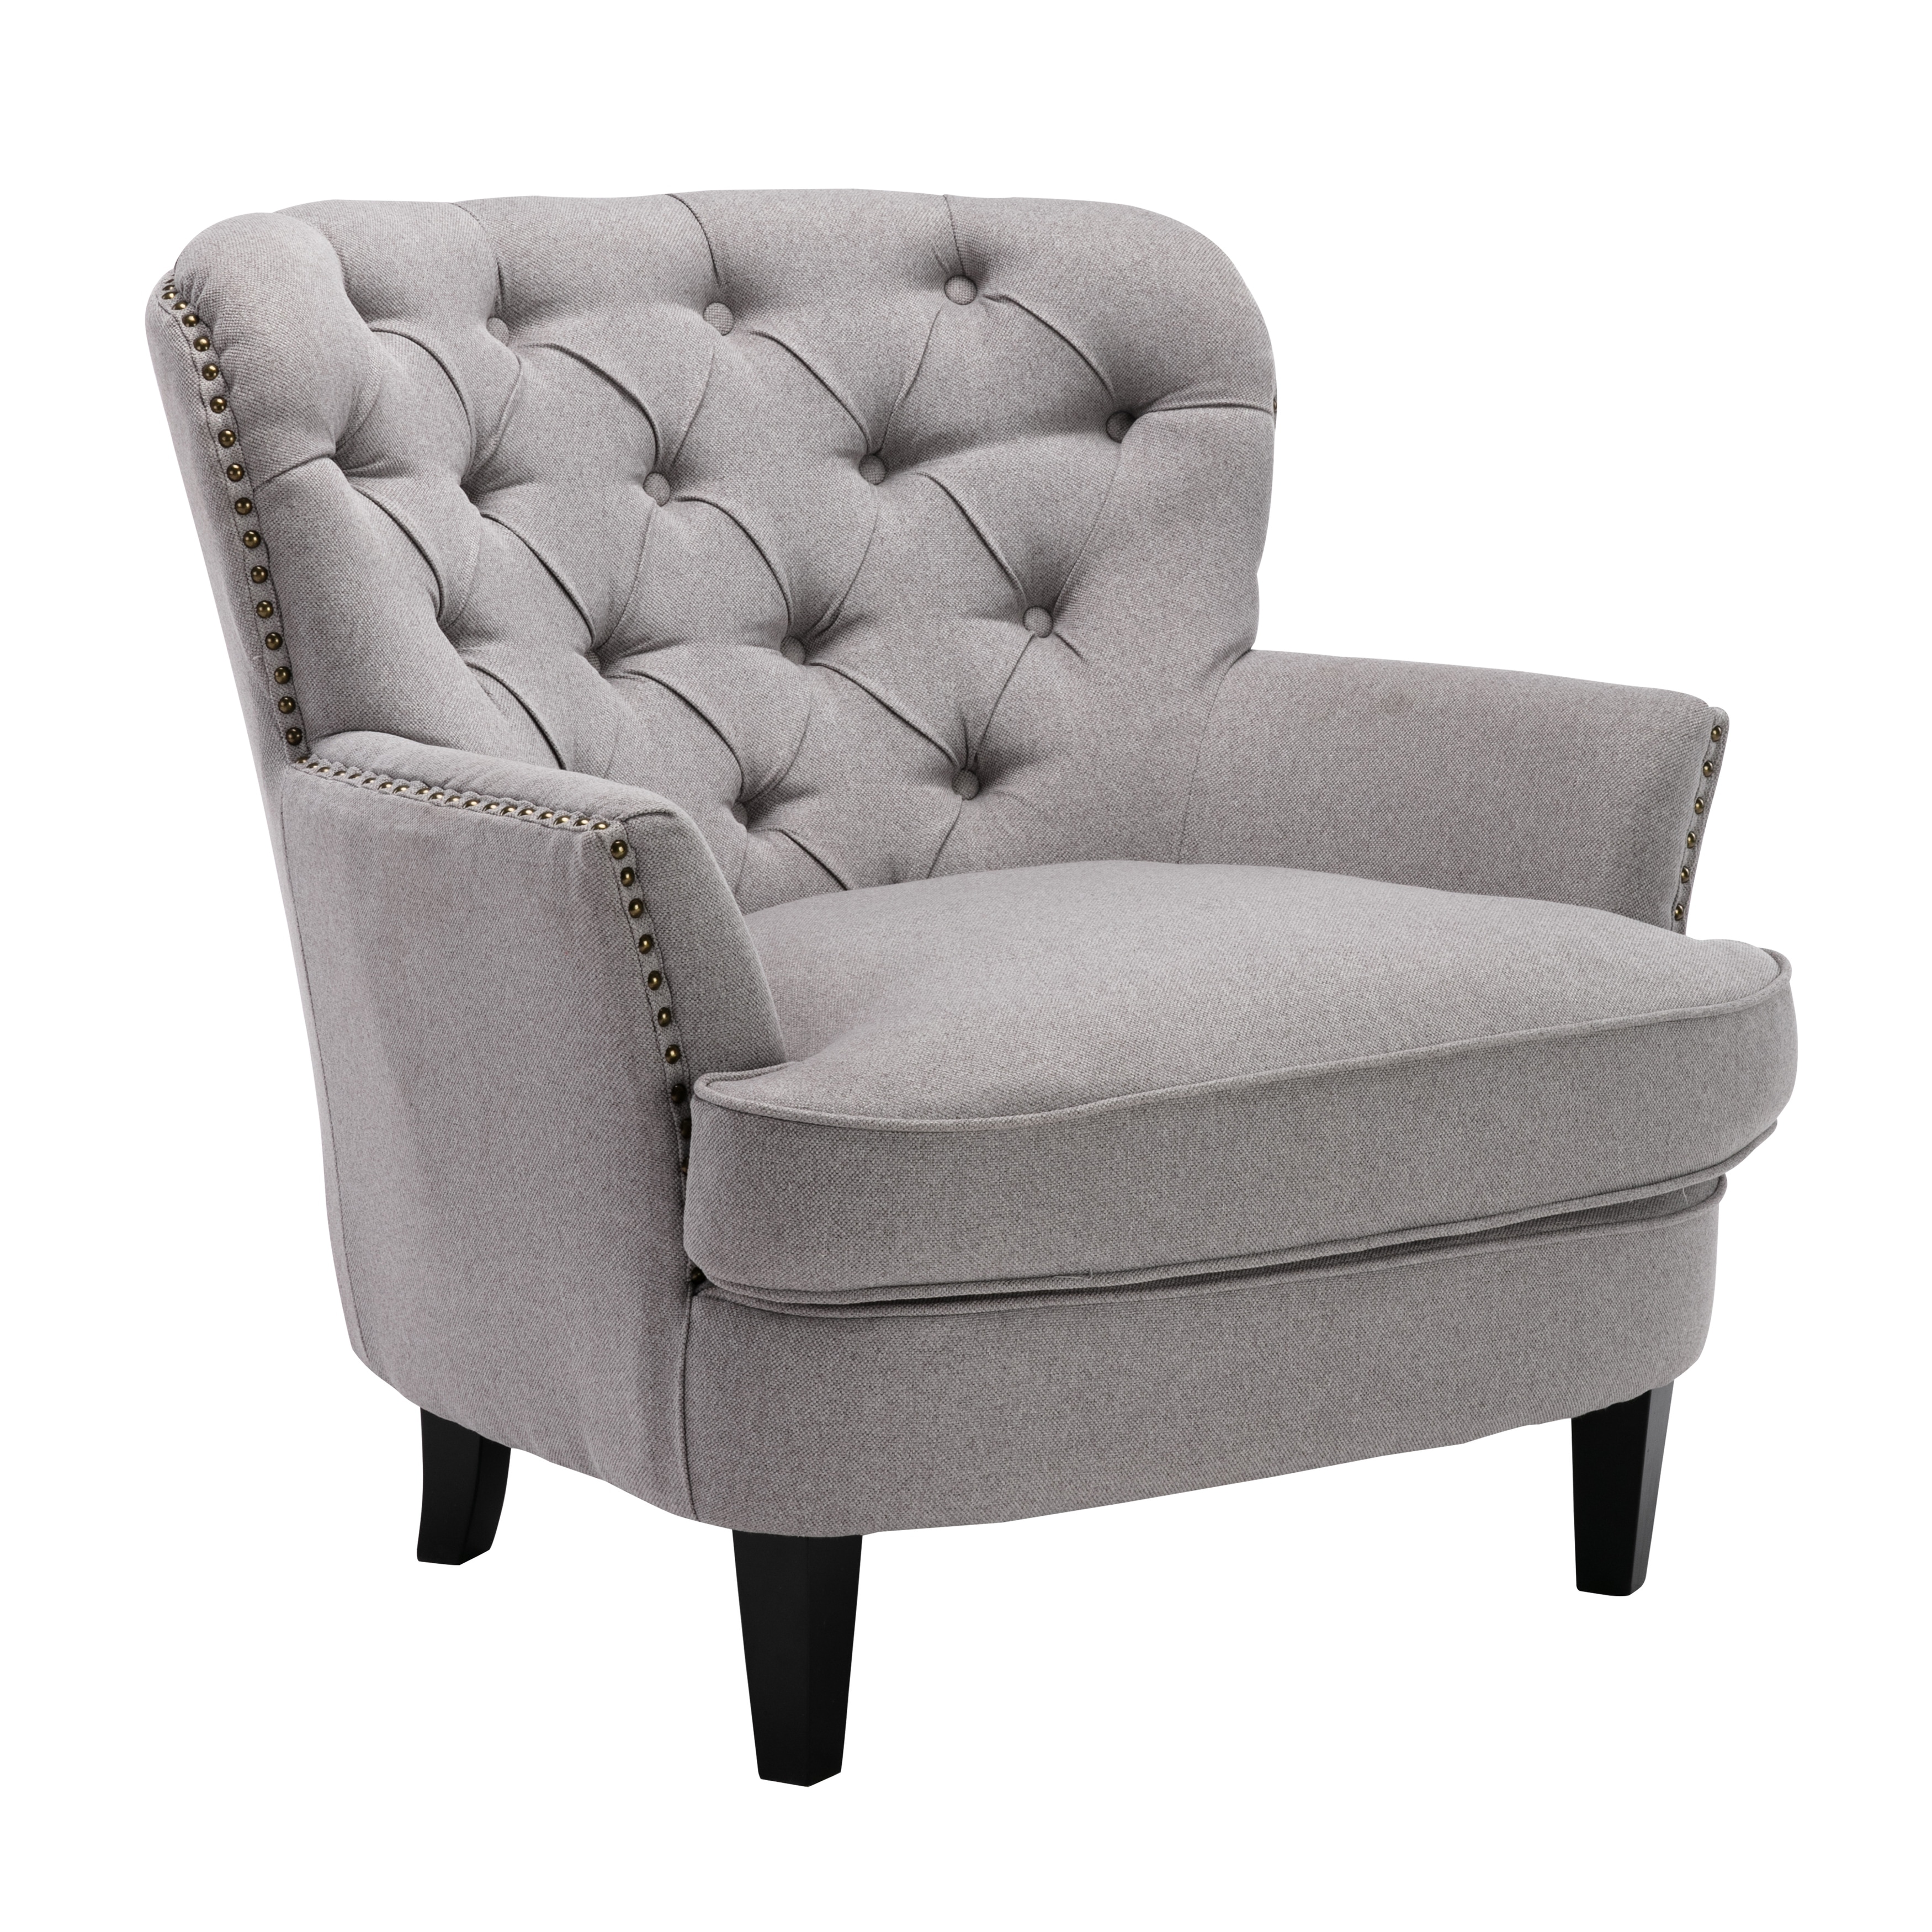 Corvus Cervine Tufted Linen Oversized Accent Club Chair Overstock 32893737